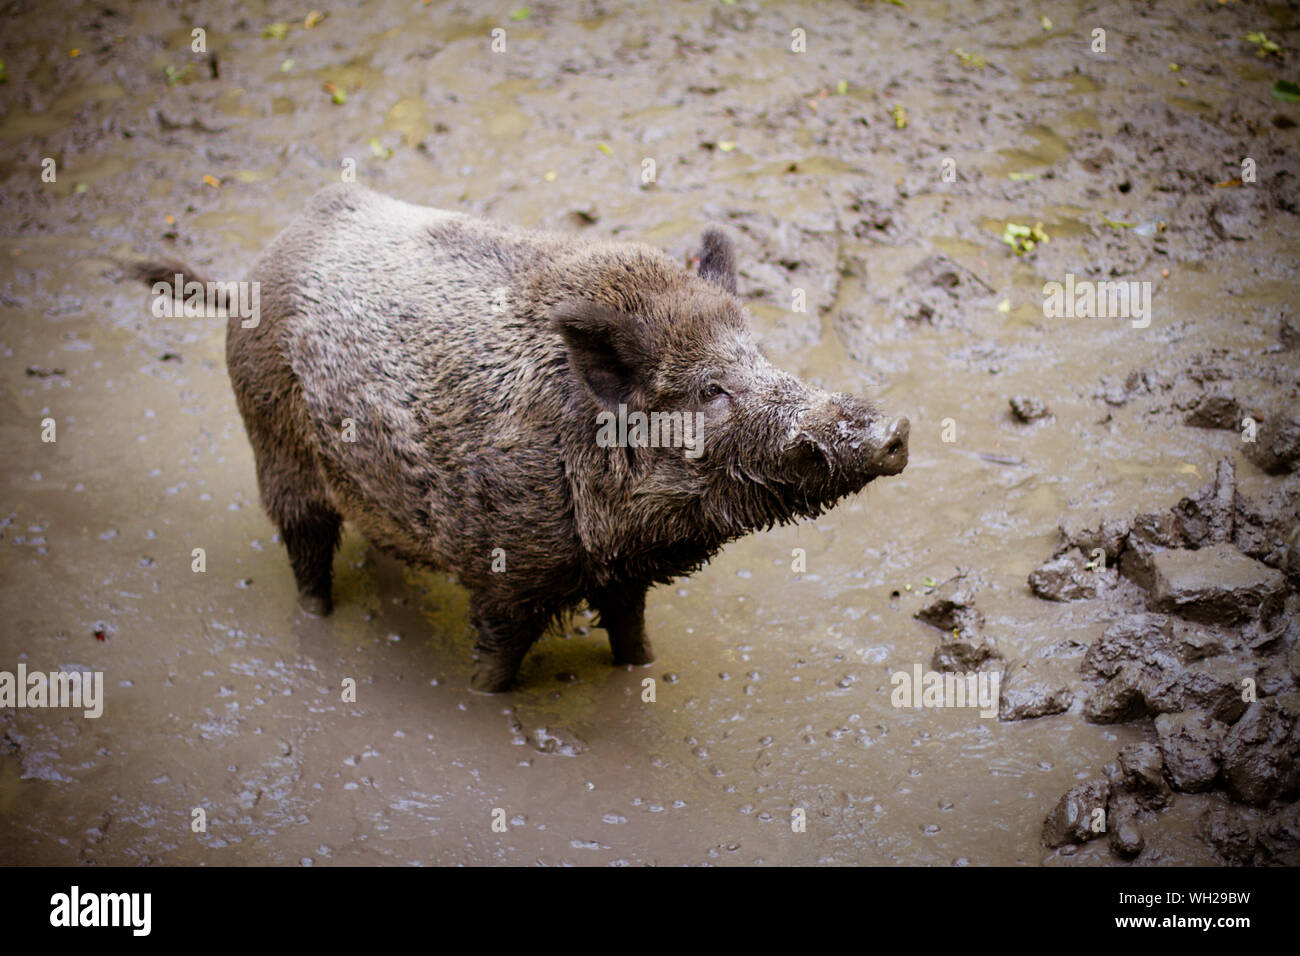 Pig Standing In Muddy Water Stock Photo